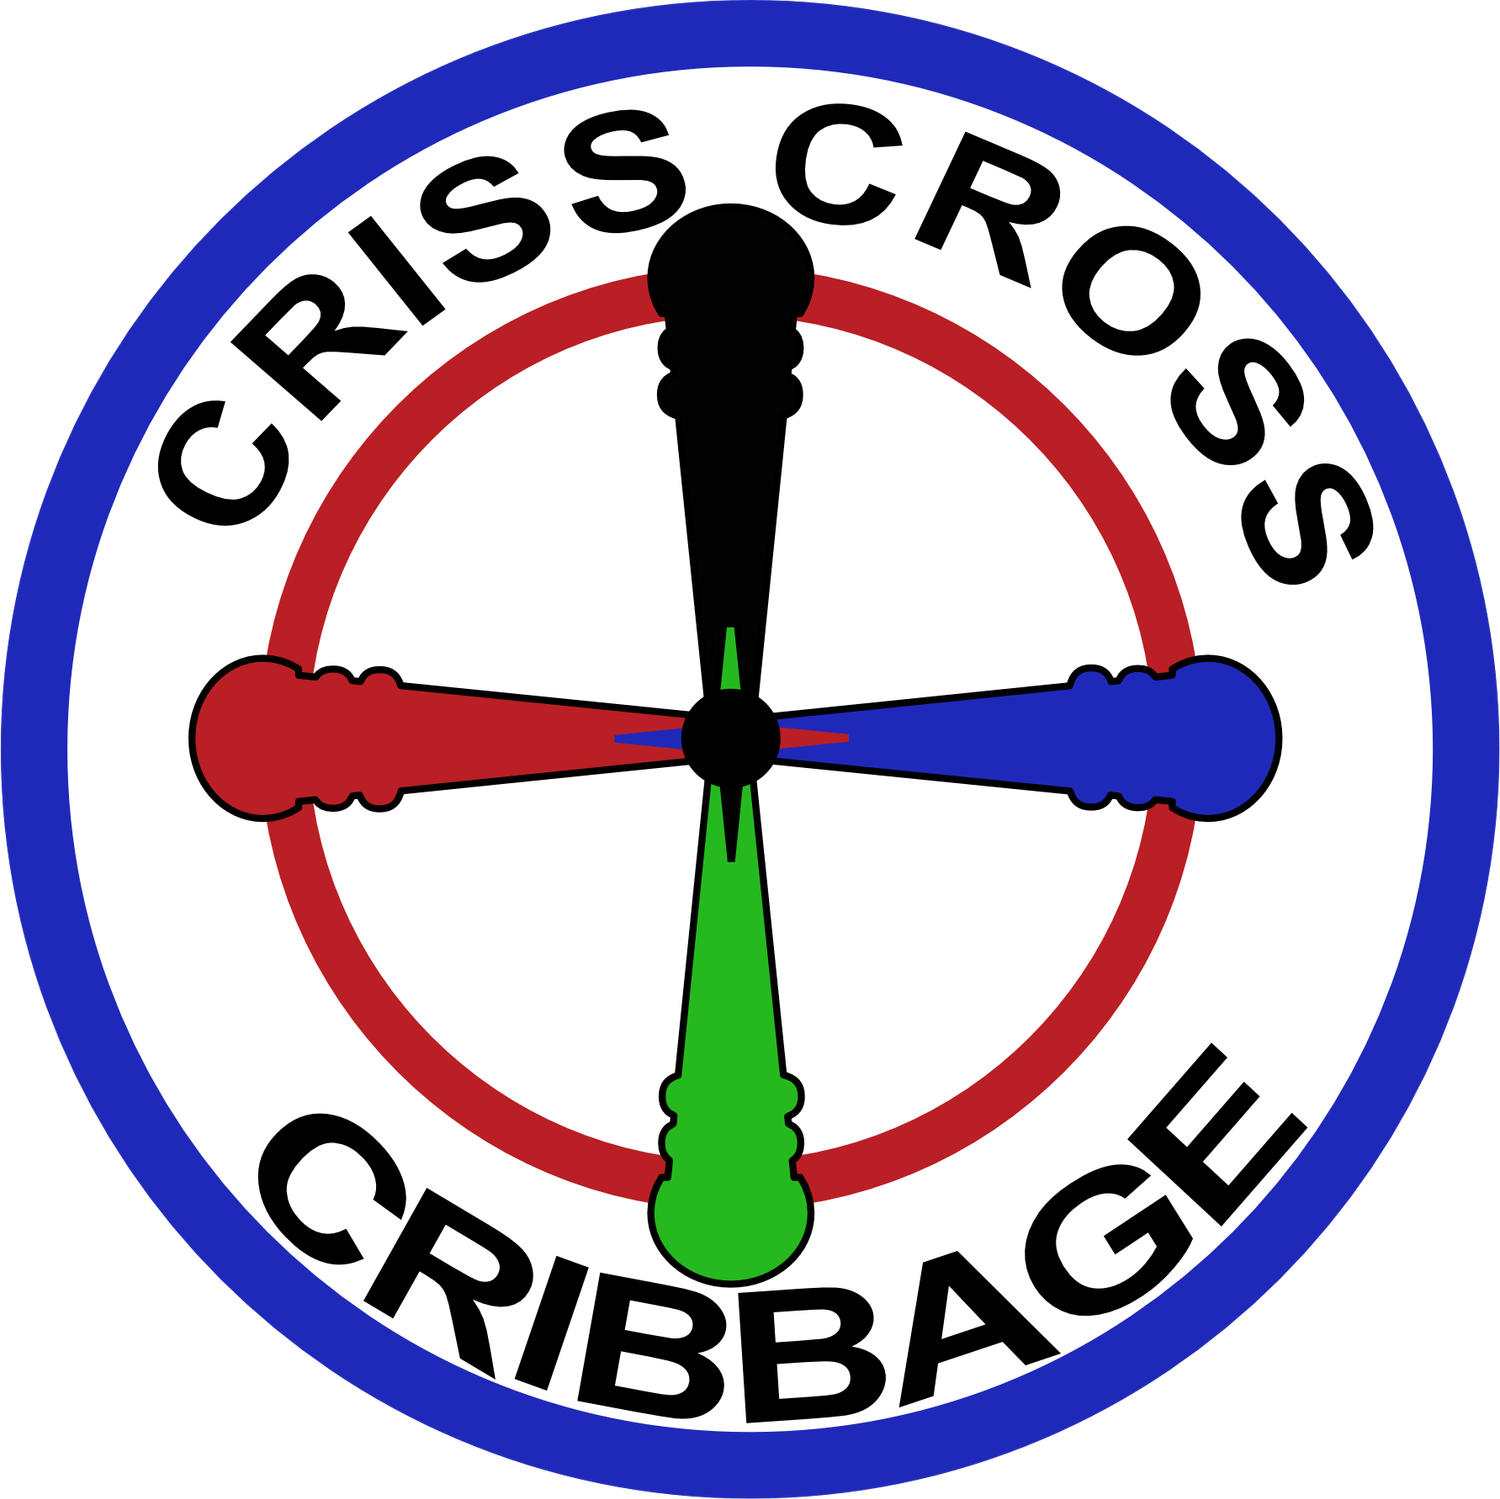 Criss Cross Cribbage